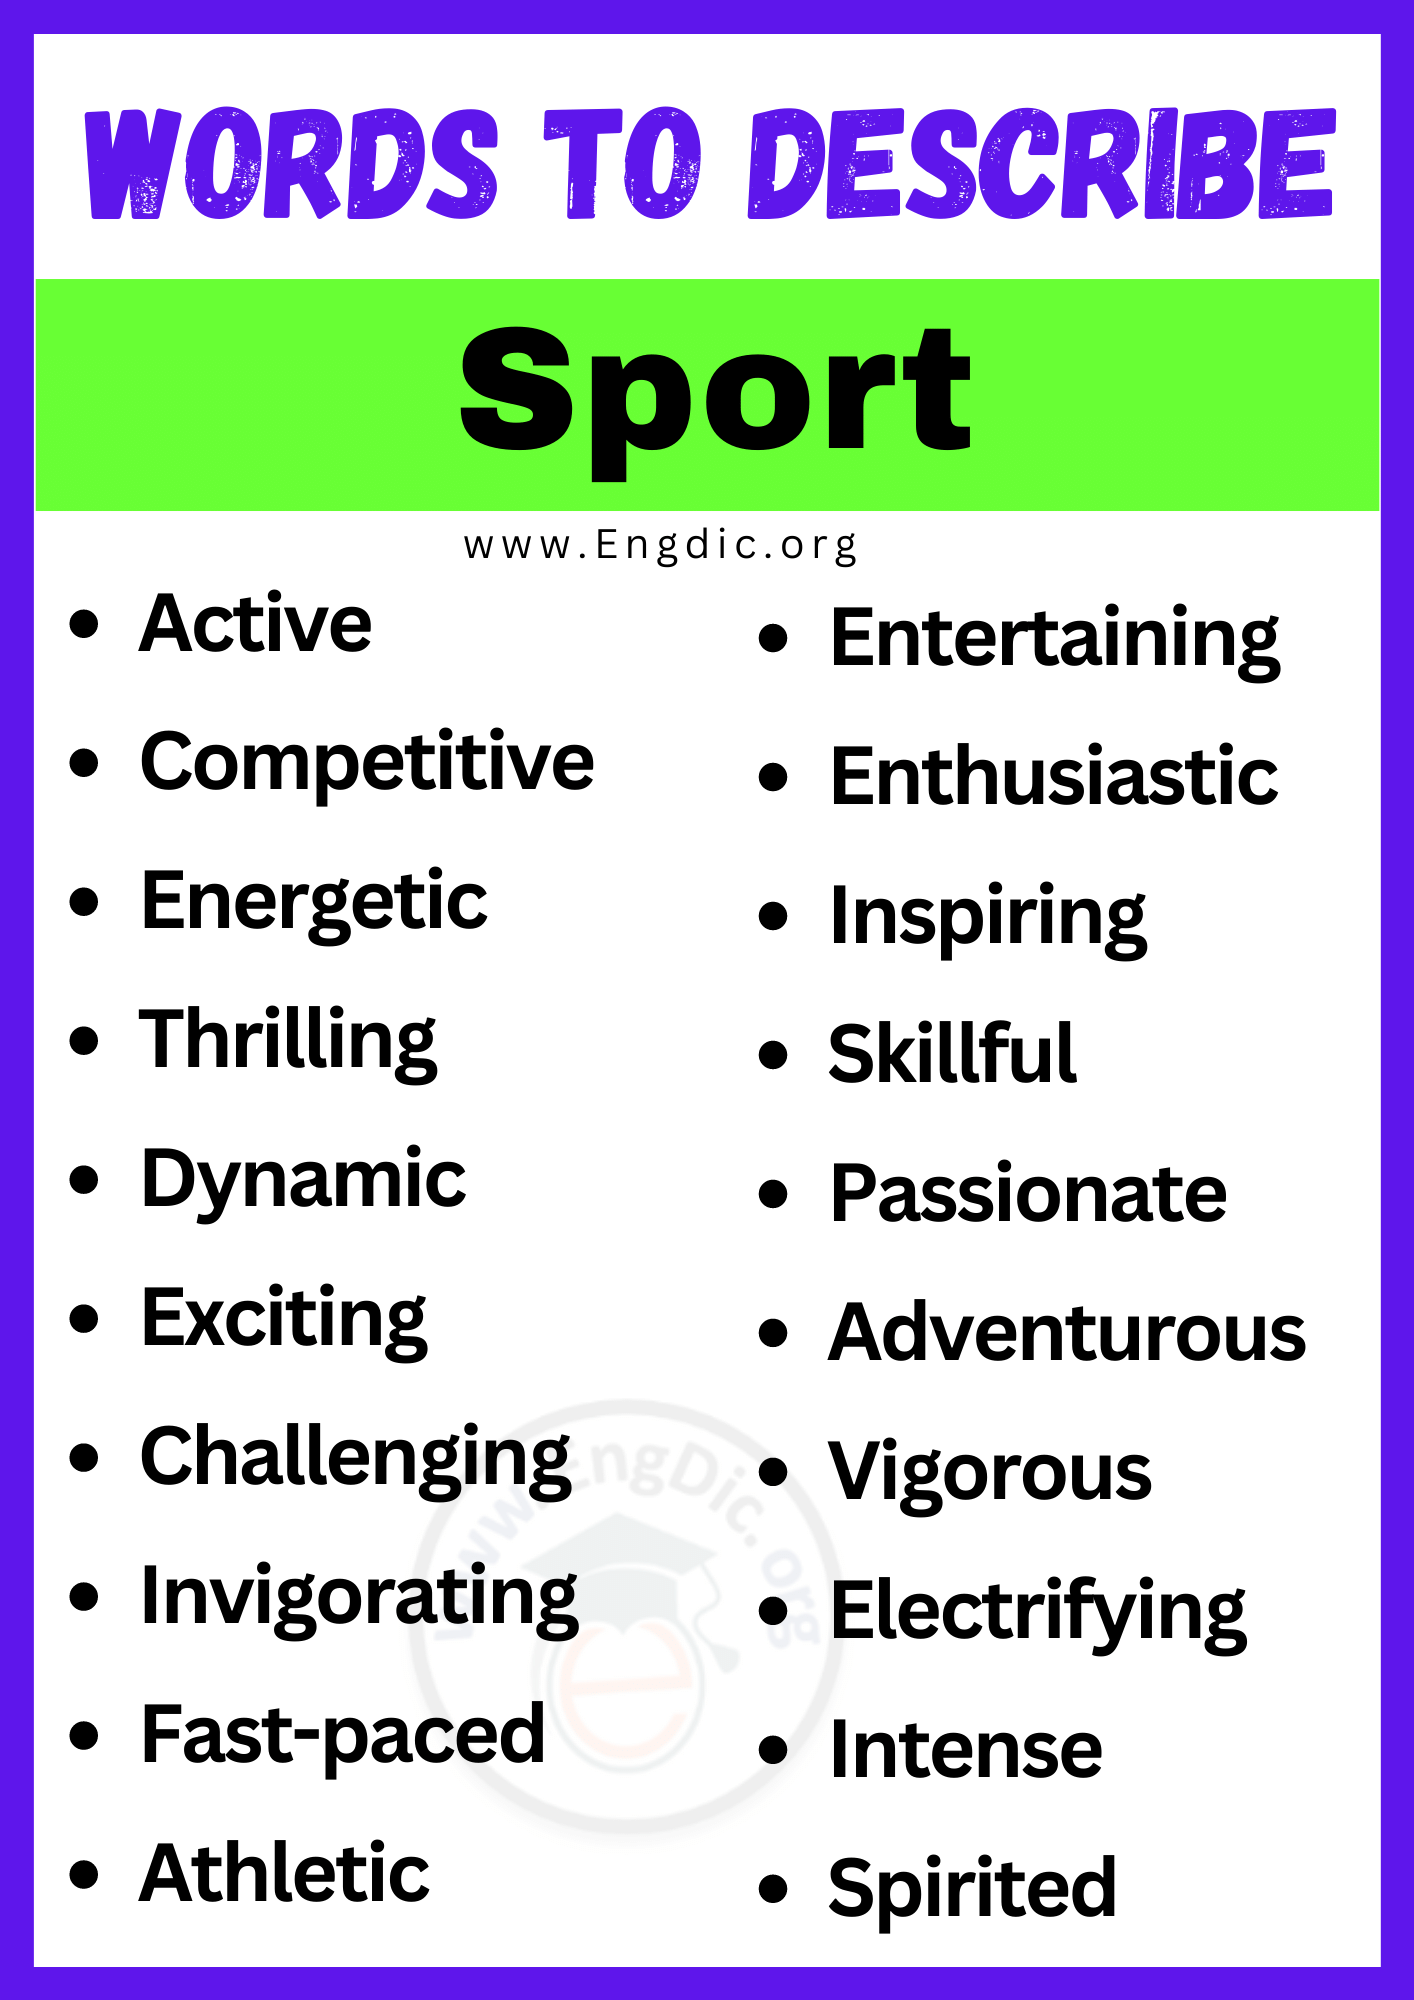 Words to Describe a Sport